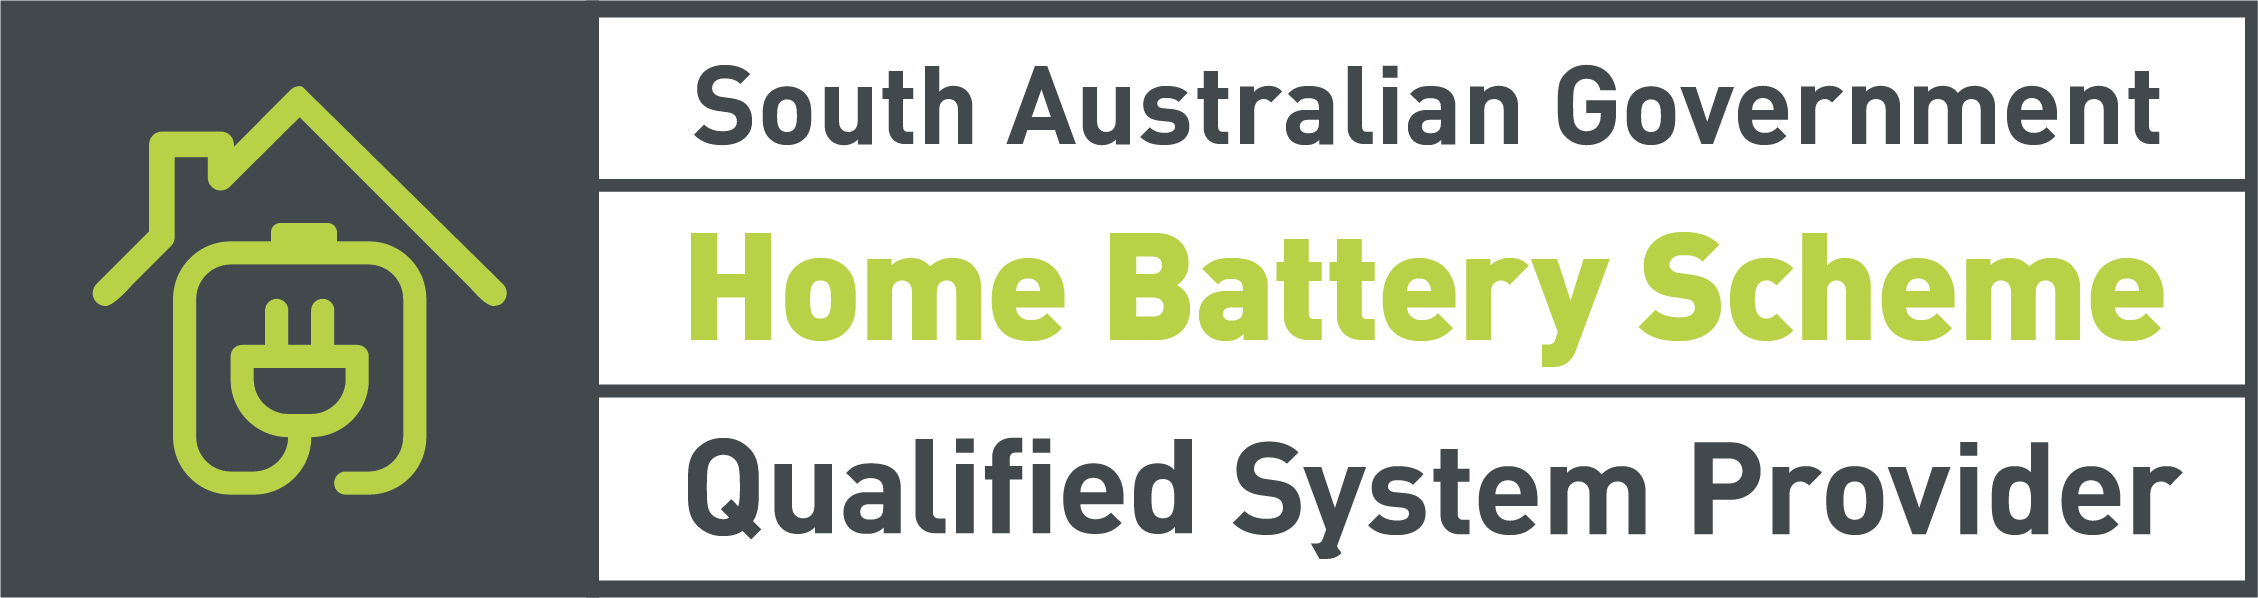 South Australian Home Battery Scheme